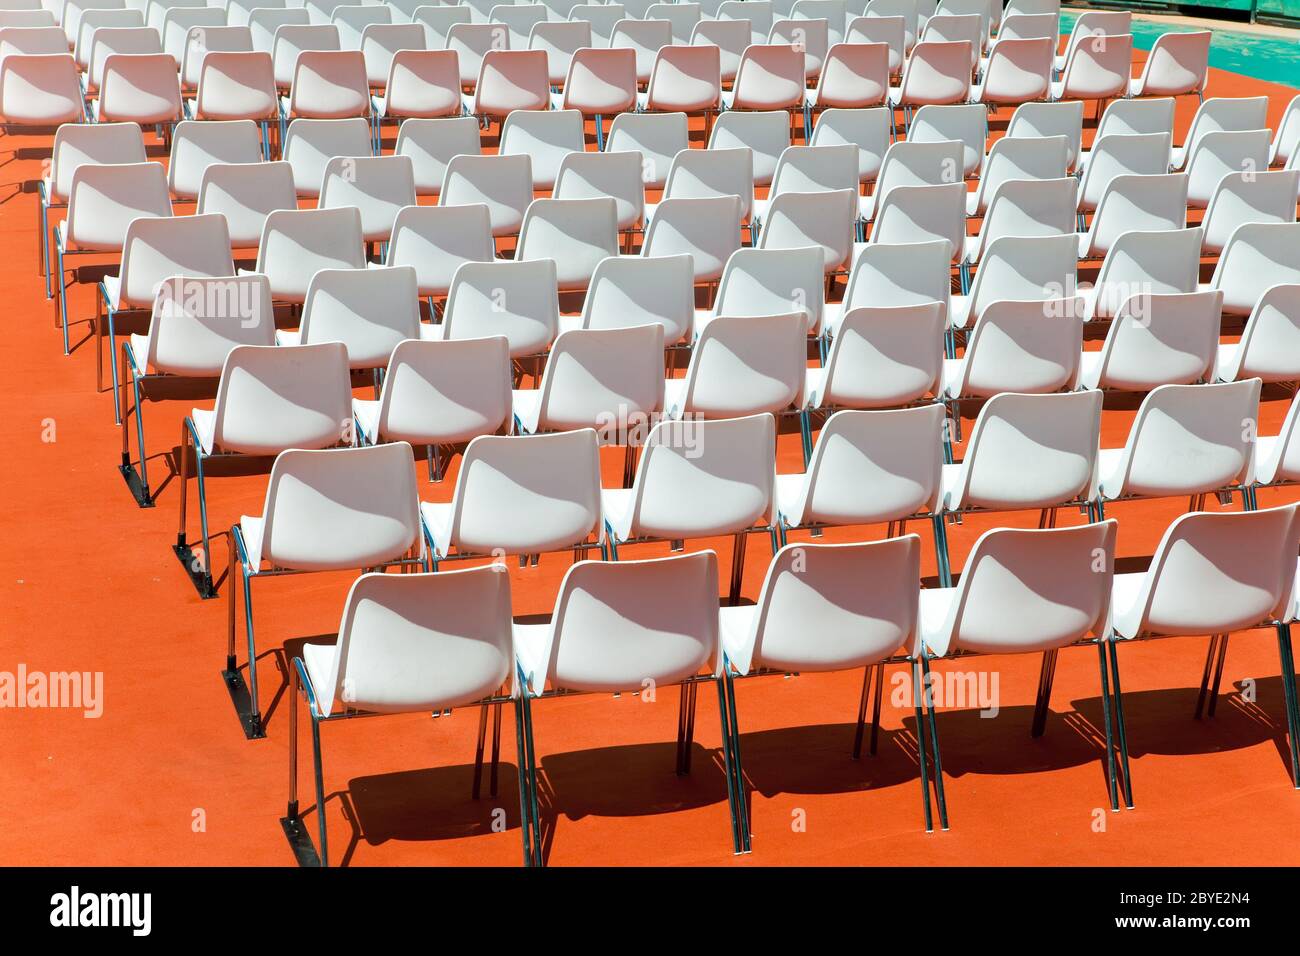 Empty rows of seats backs to spectator Stock Photo